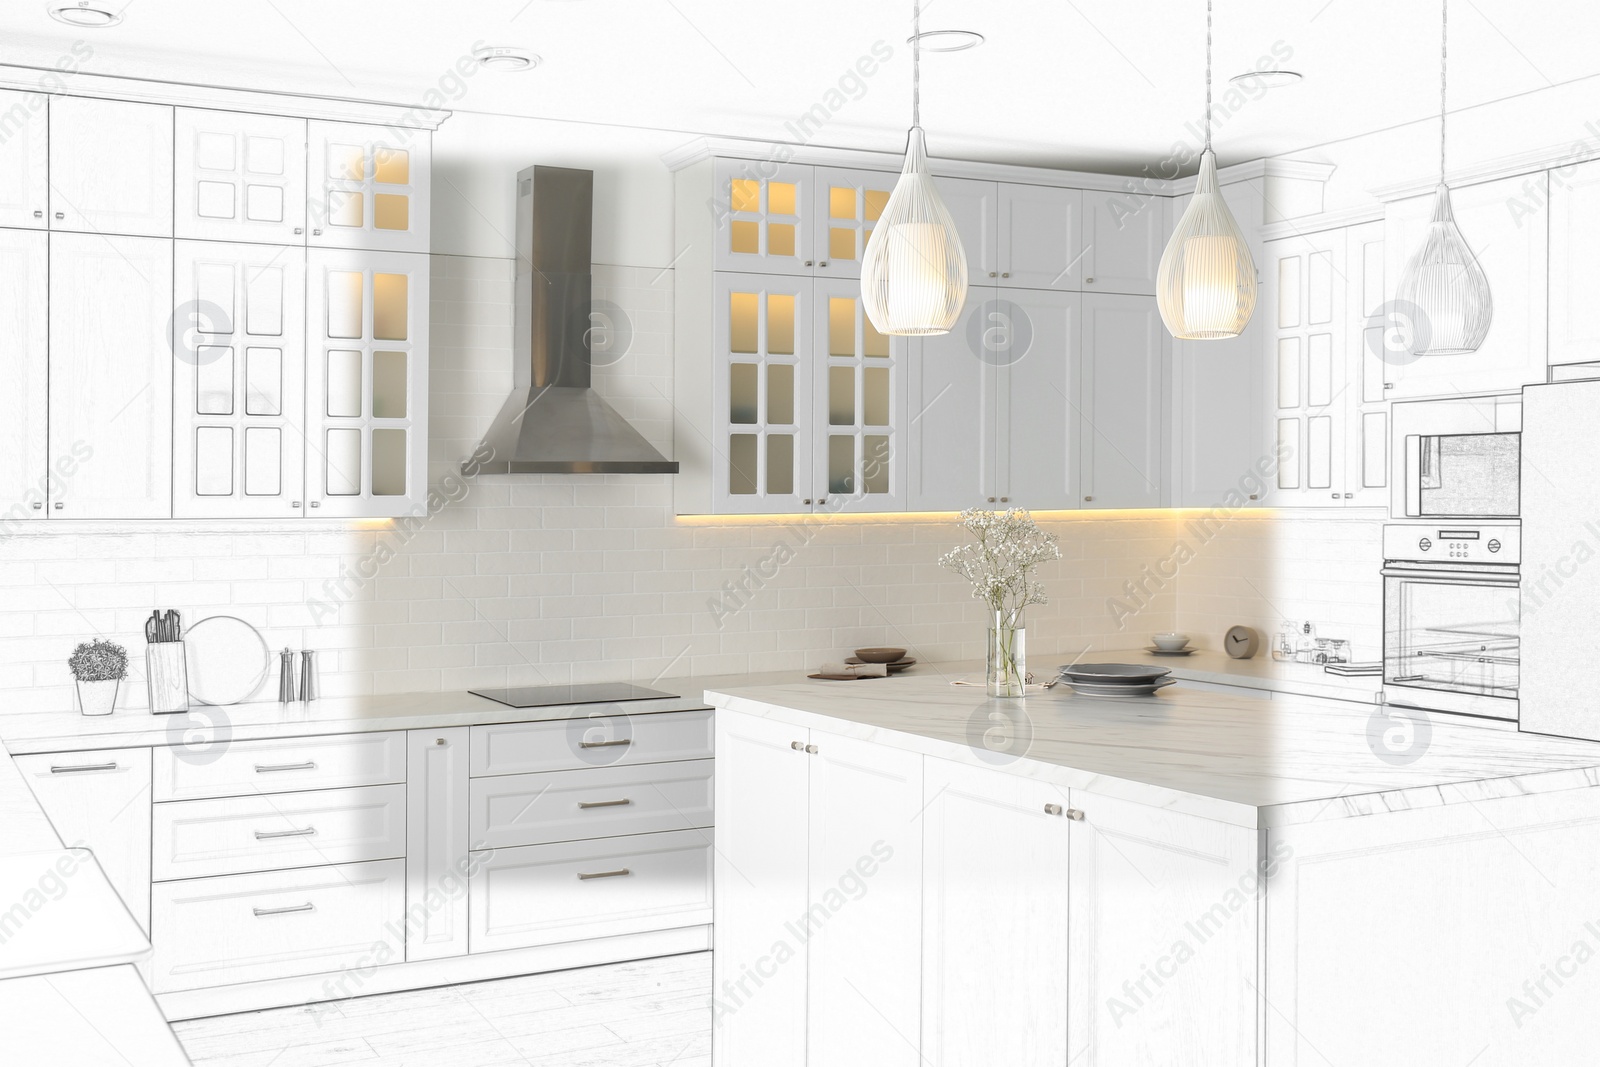 Image of Modern kitchen with stylish white furniture. Illustrated interior design